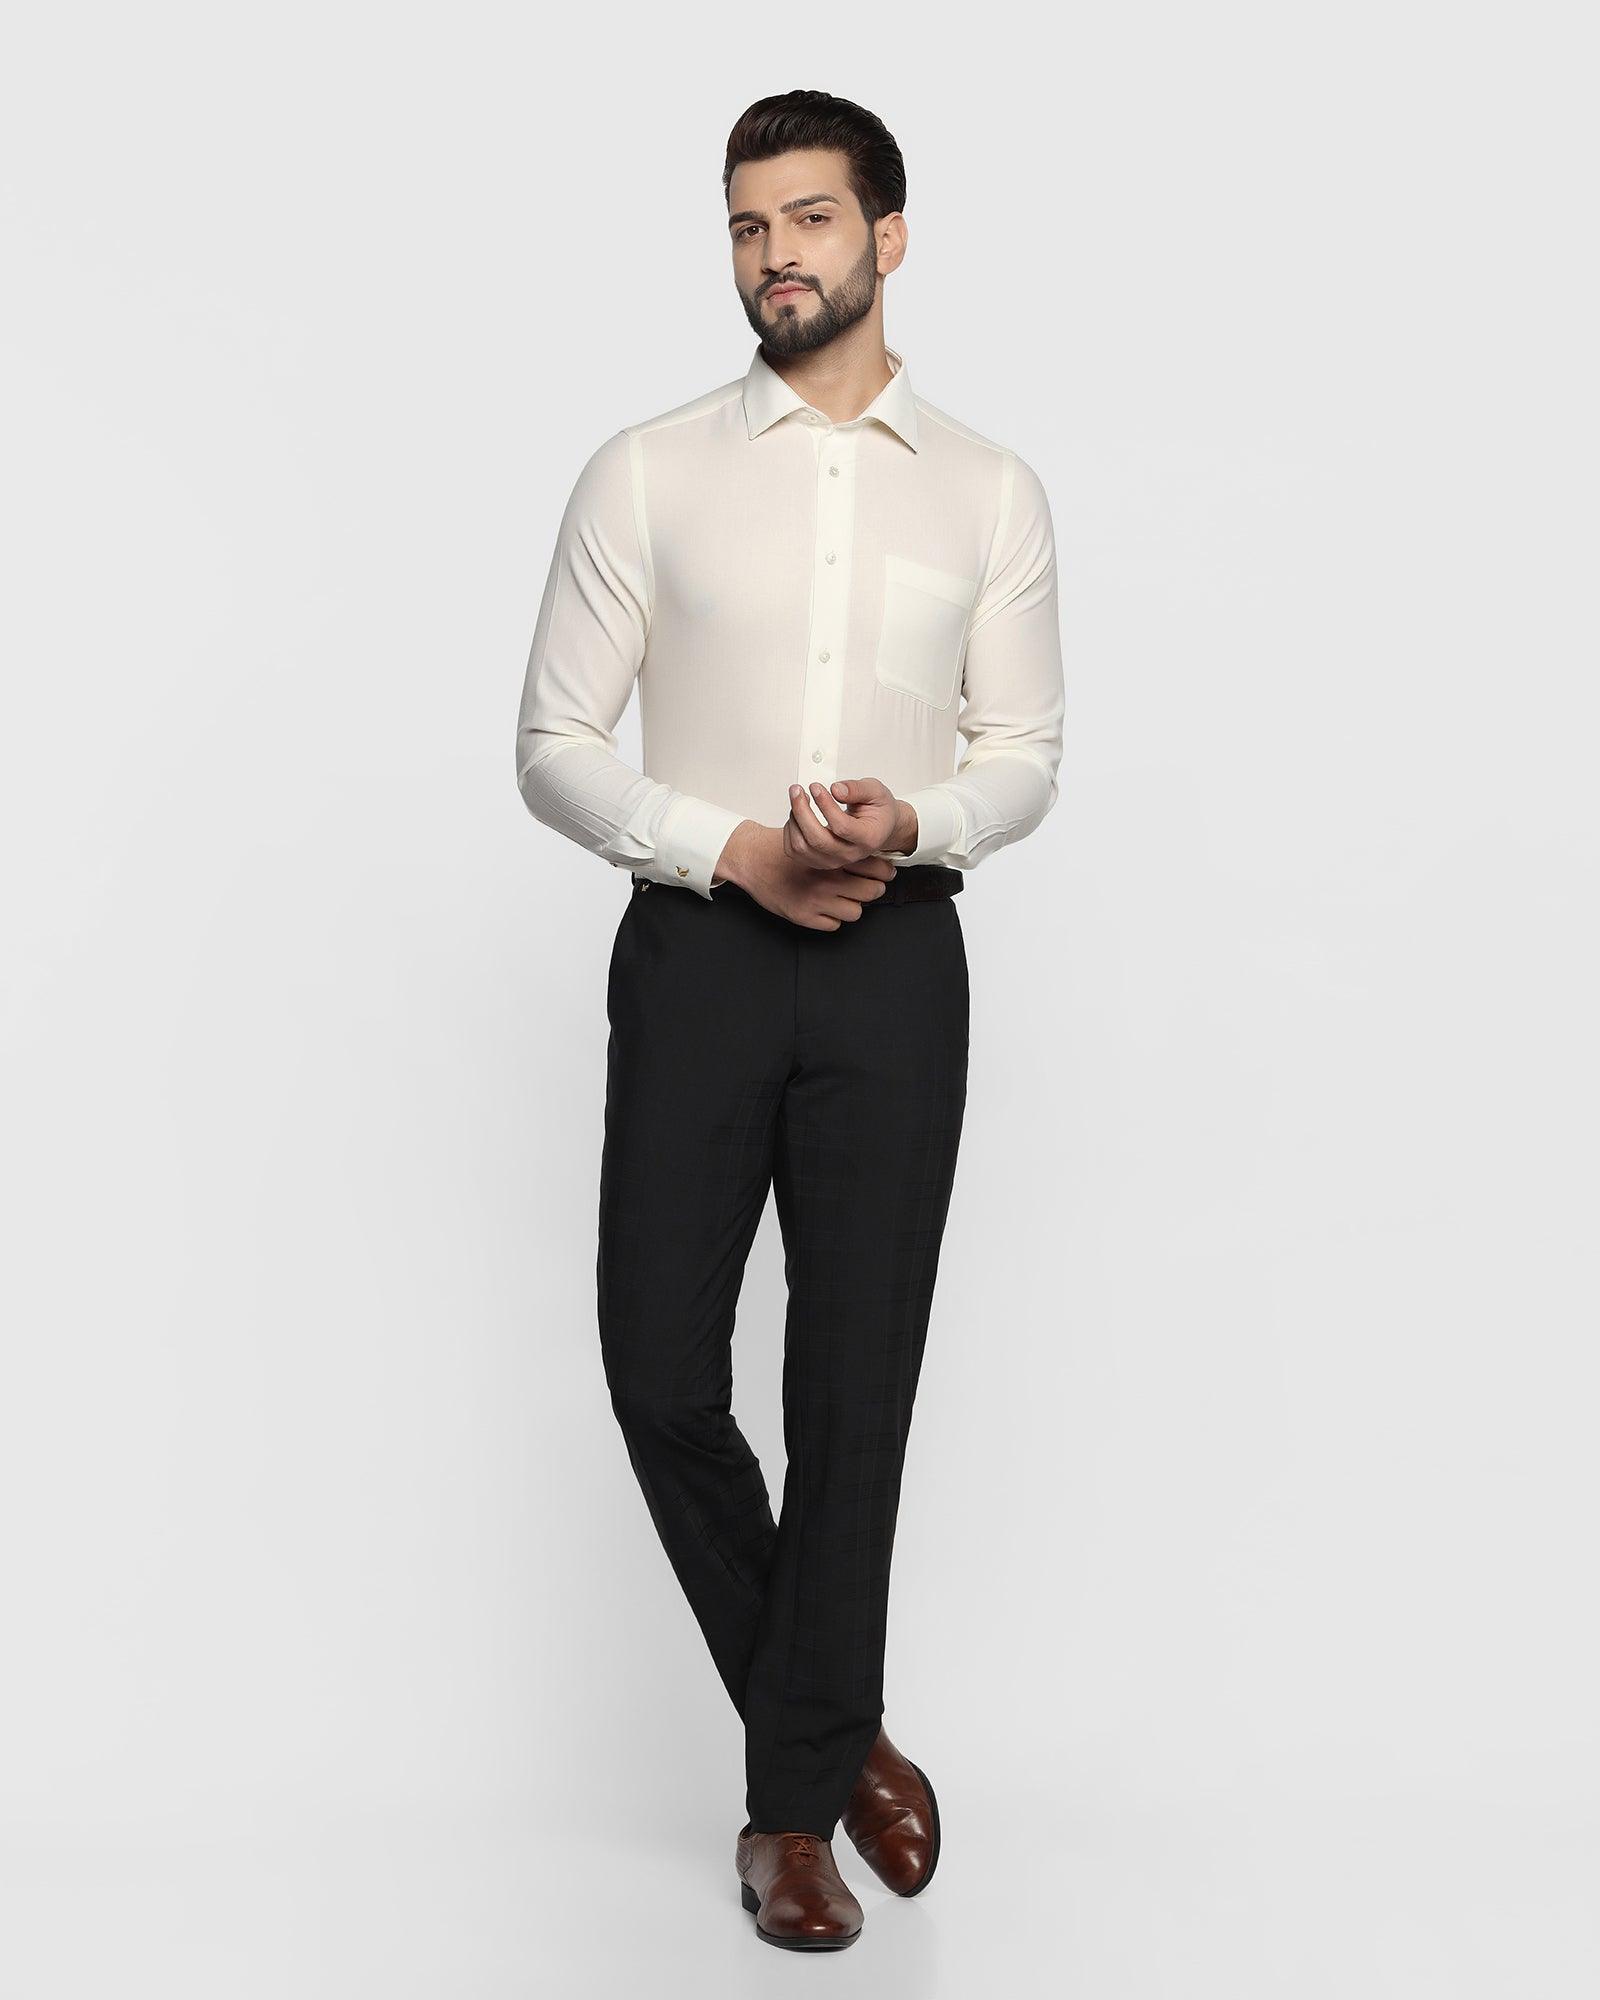 Buy Men Elegant Black Shirt Black Trouser for Office Wear, Mens Formal Shirt  and Pants Formal Wear Black Pant With Black Shirt Gift for Him Online in  India - Etsy